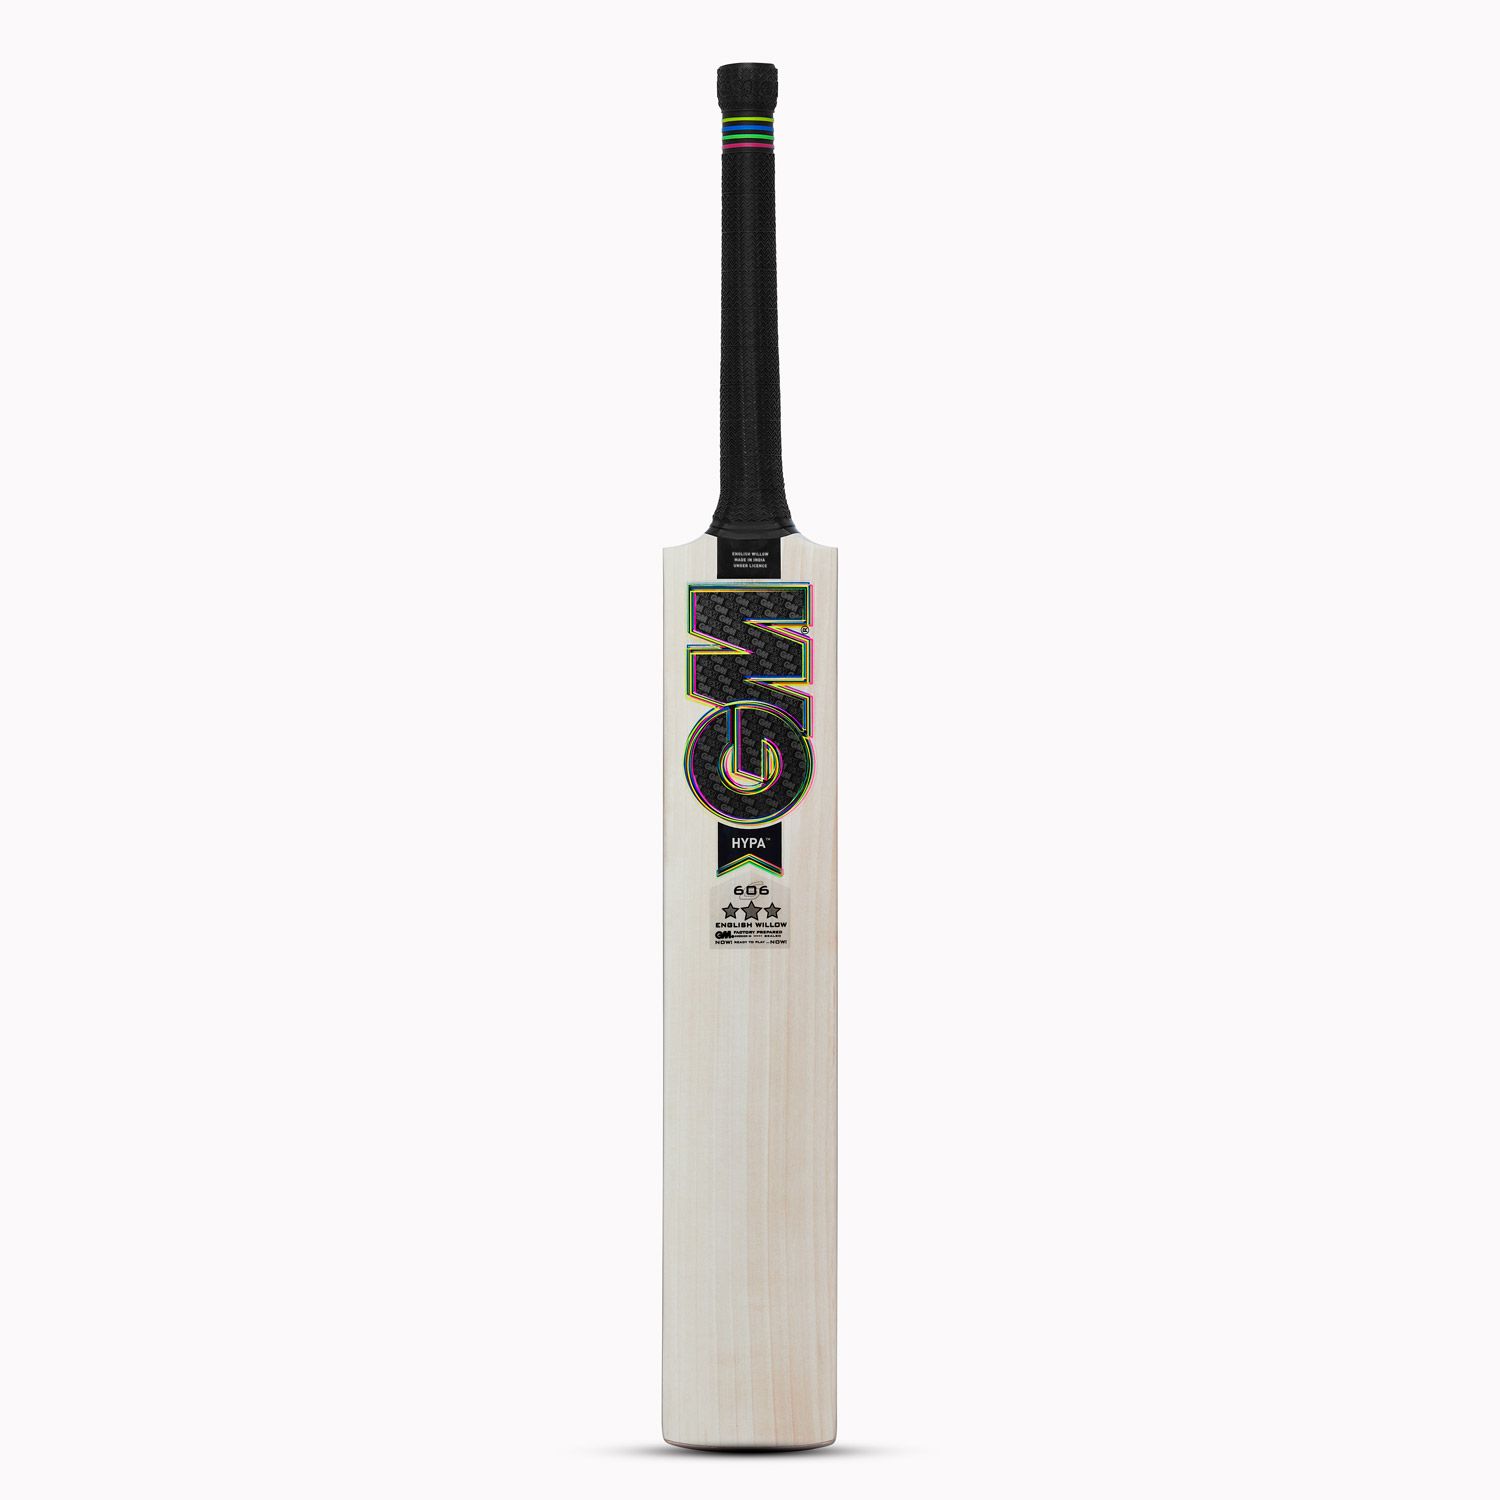 Hypa 606 English Willow Cricket Bat